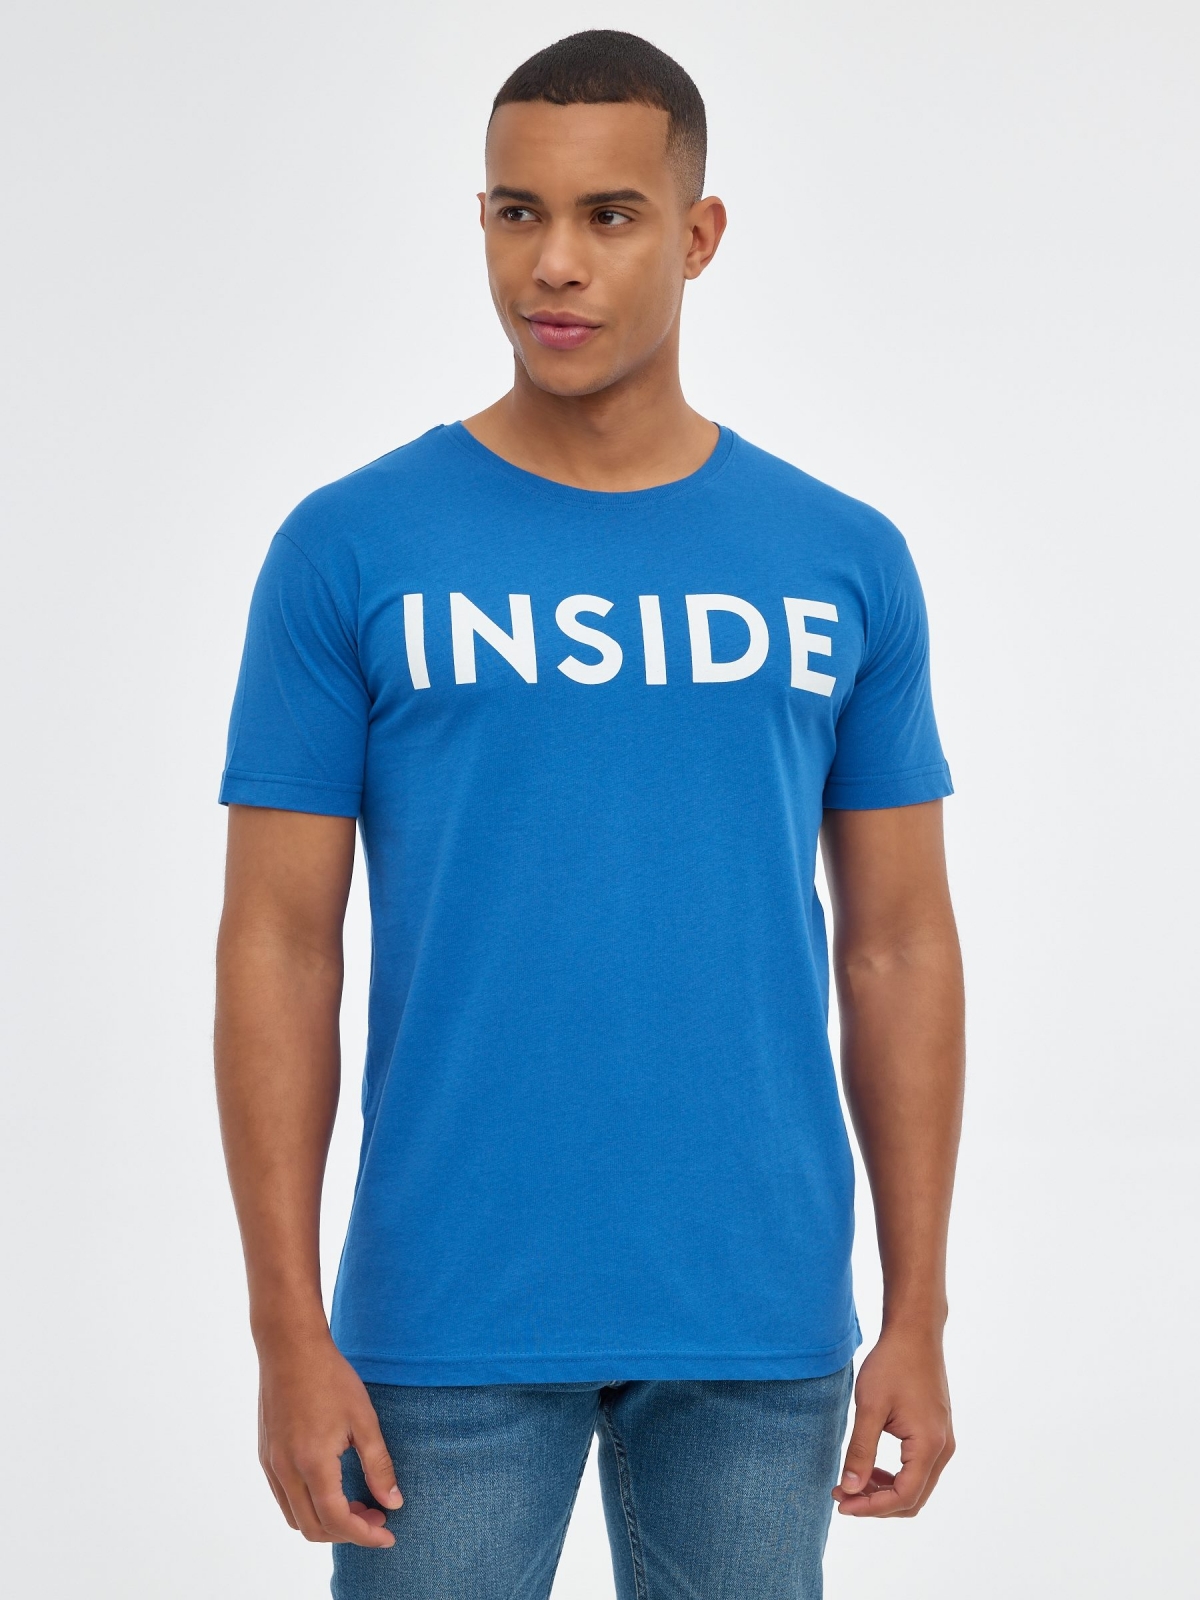 Camiseta básica "INSIDE" azul ducados vista media frontal